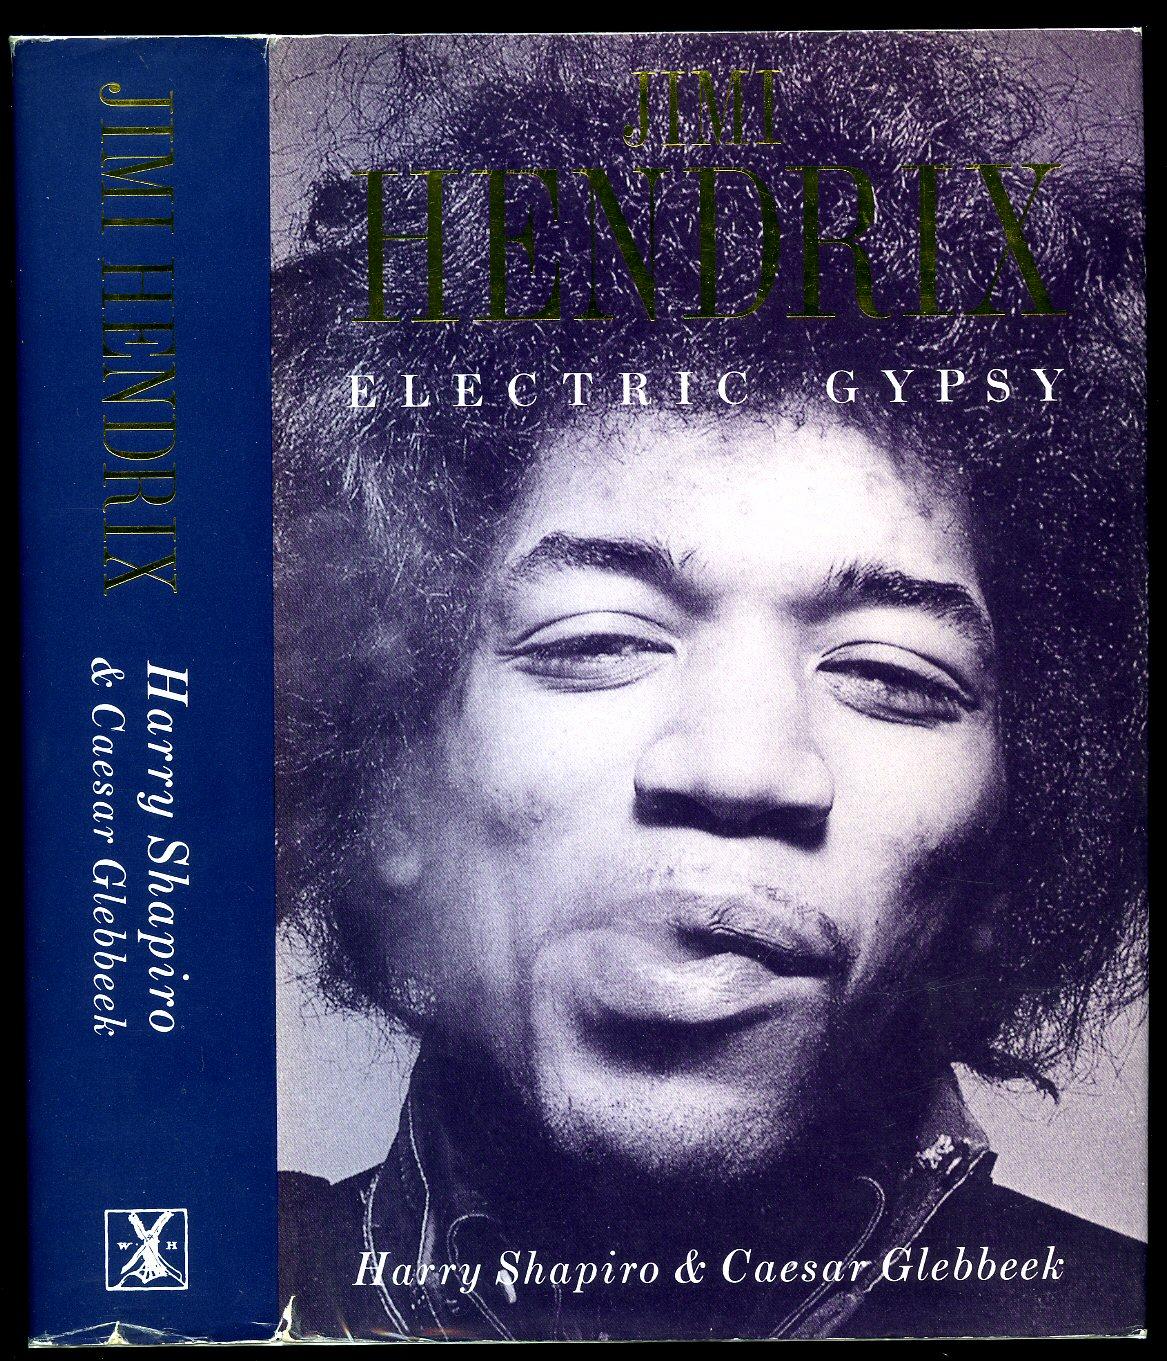 Jimi Hendrix; Electric Gypsy - Harry Shapiro & Caesar Glebbeek [Jimi Hendrix]